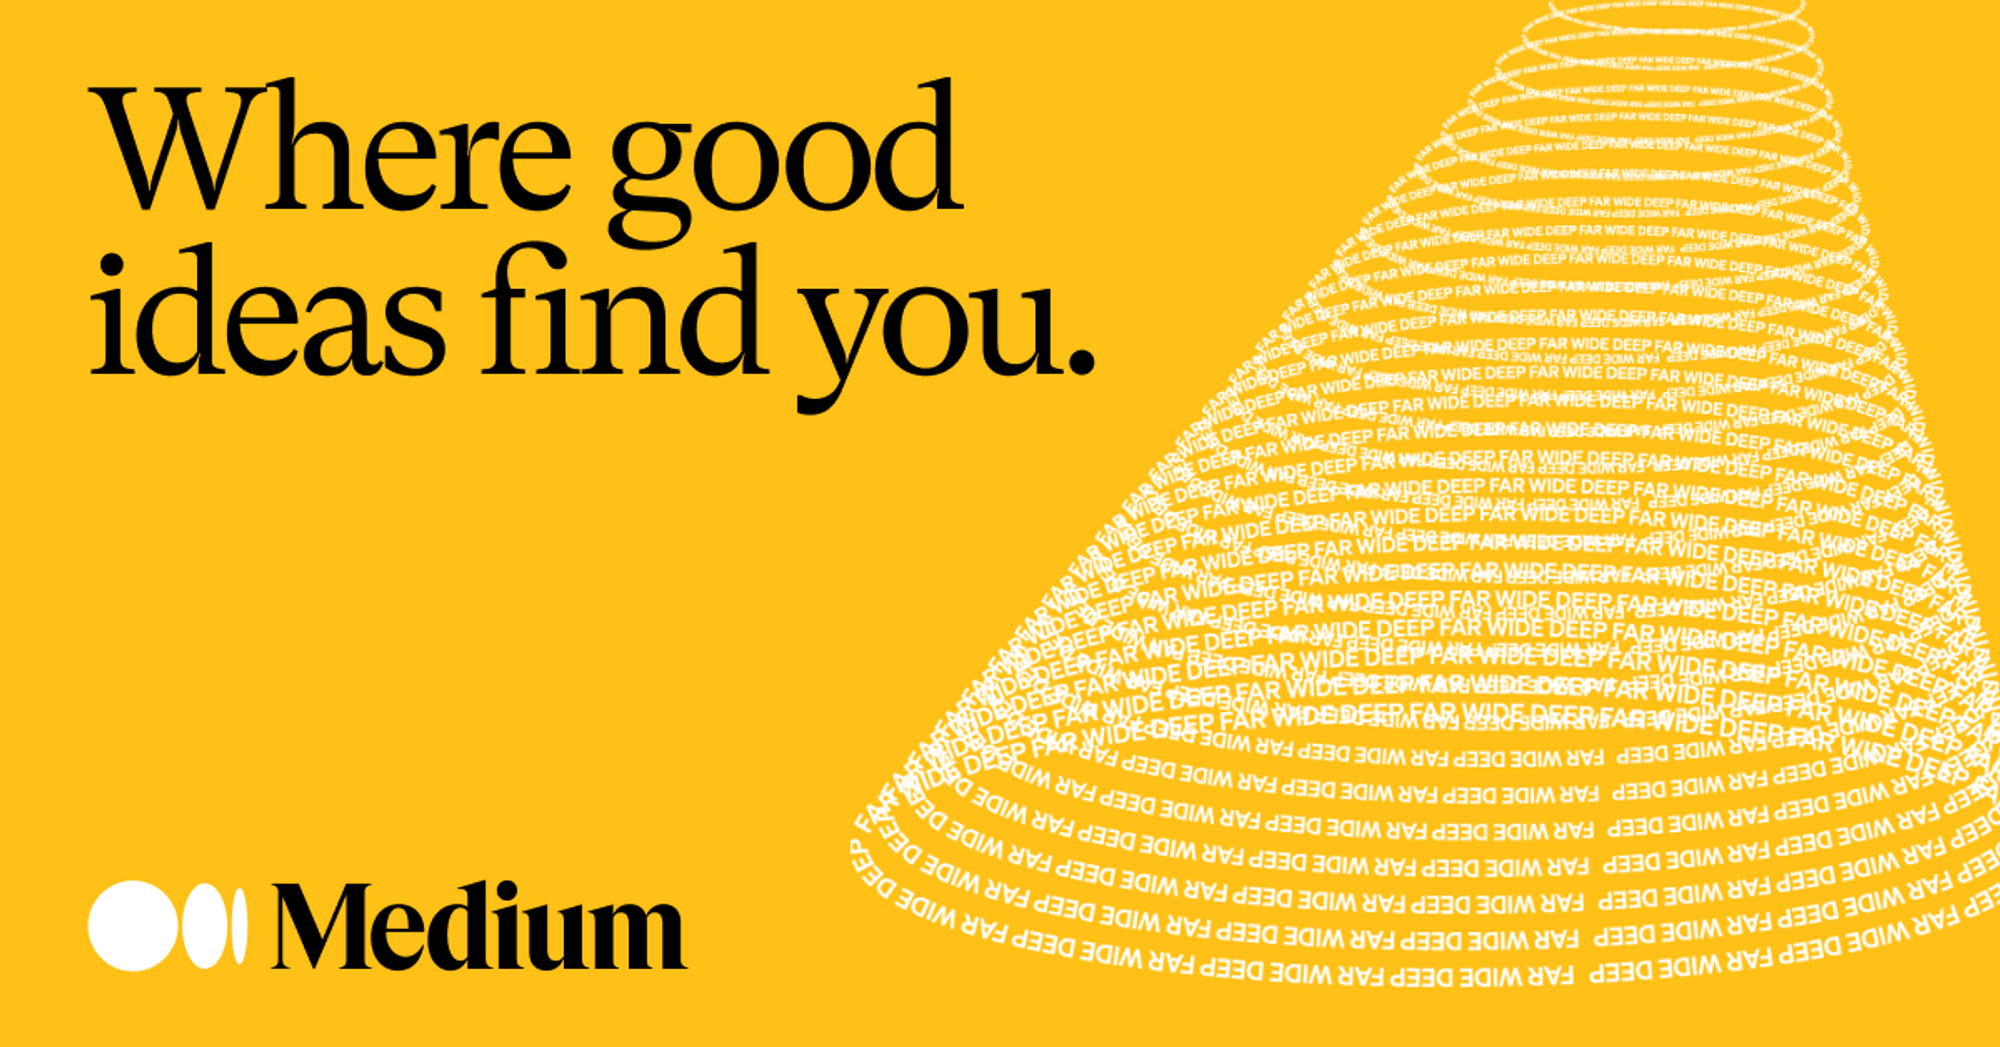 Medium - Where good ideas find you.